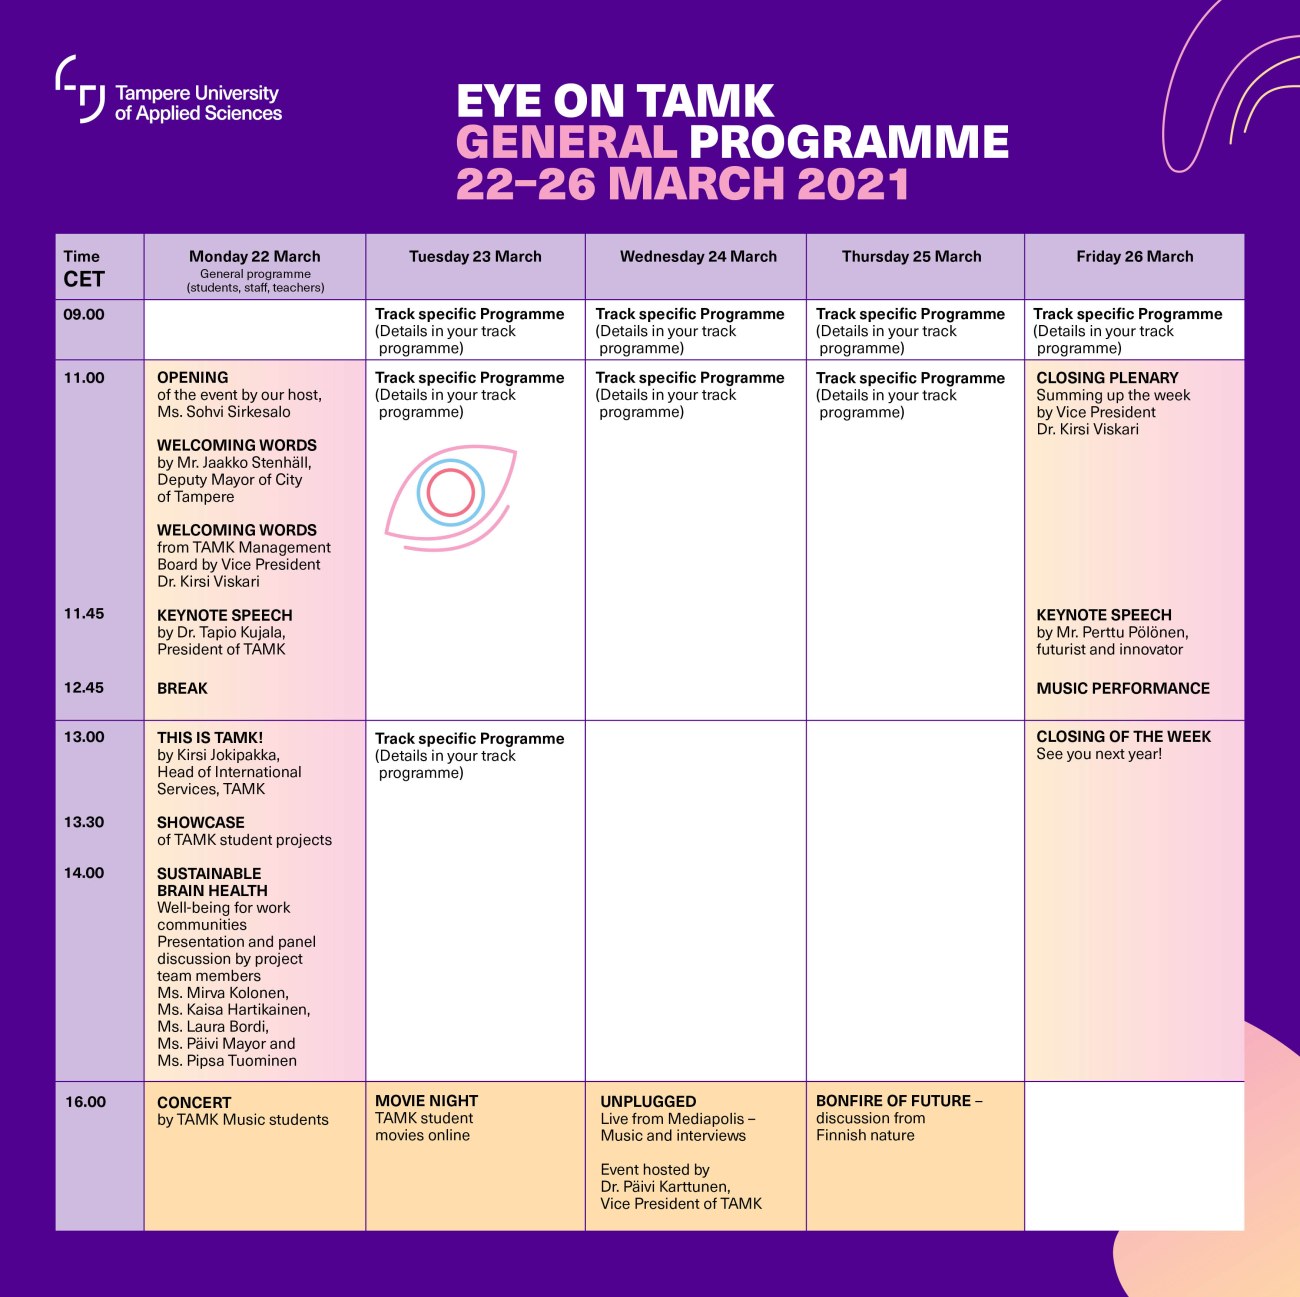 Eye on TAMK 2021 general programme